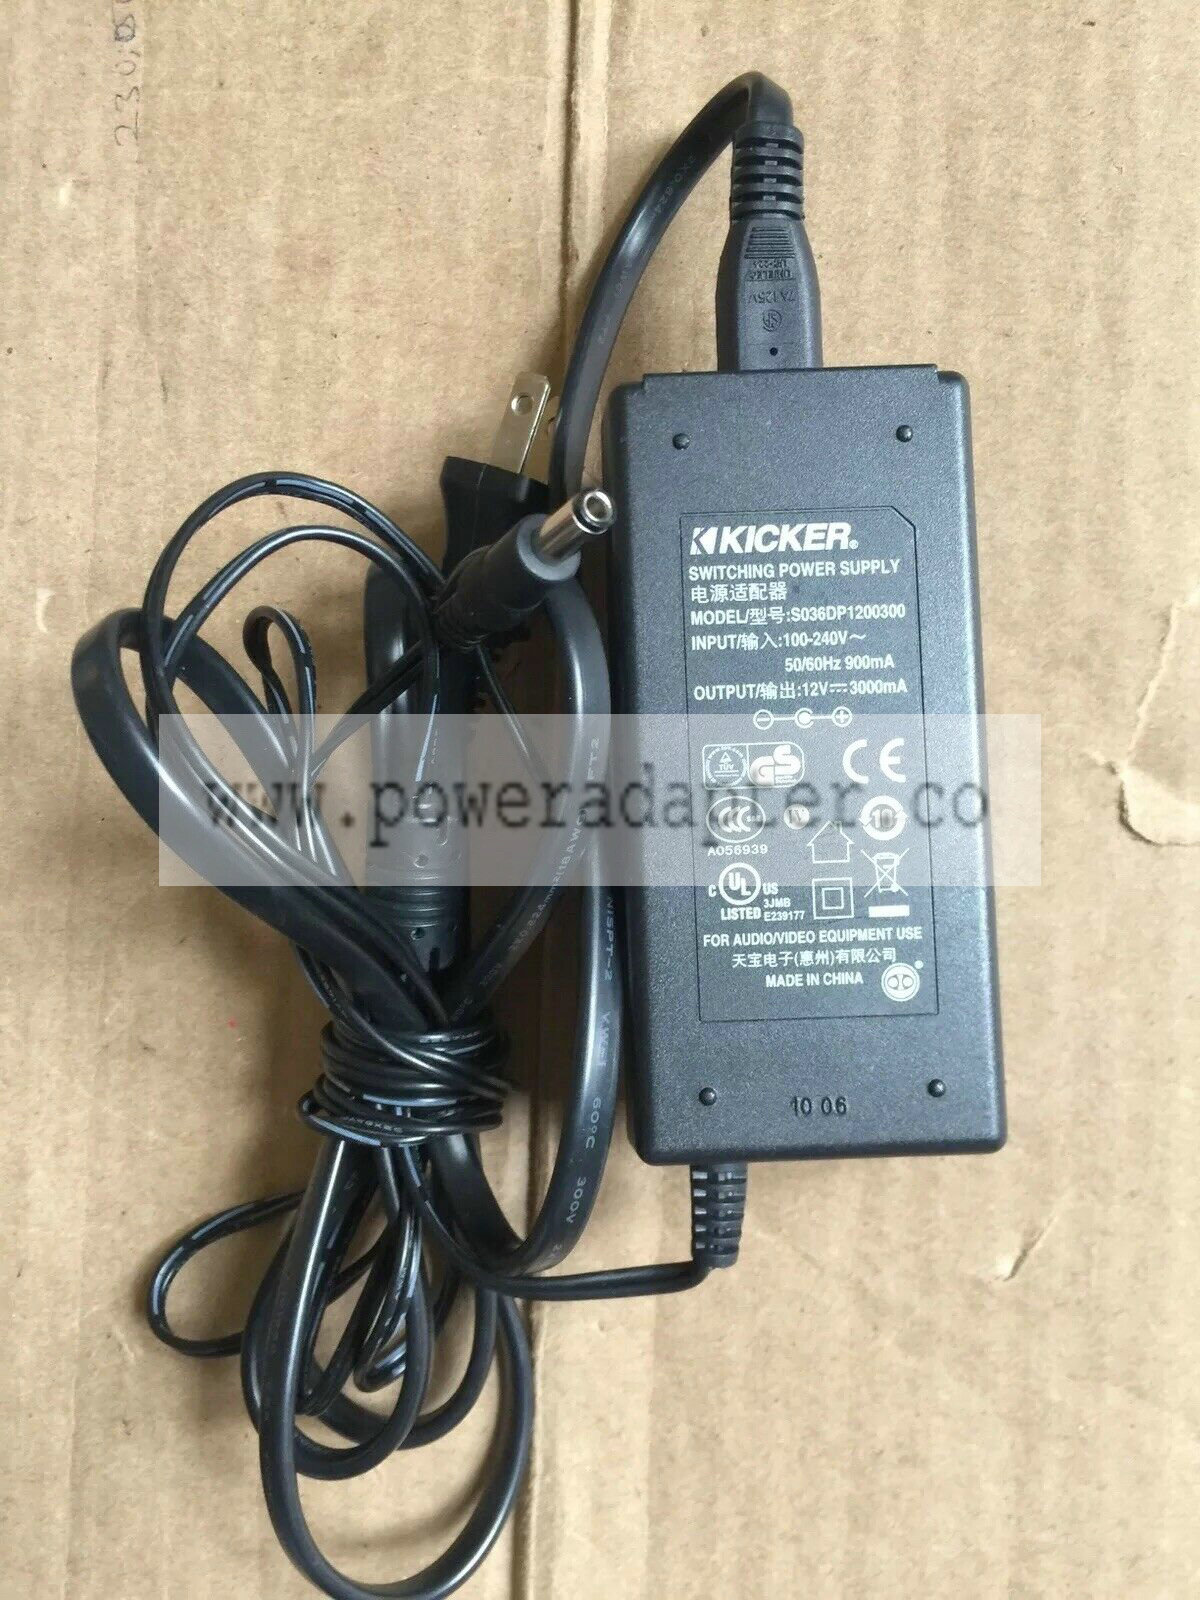 Kicker iPod Dock Radio Ik150 Ik350 Power Adapter S036DP1200300 Brand: KICKER Country/Region of Manufacture: China Ou